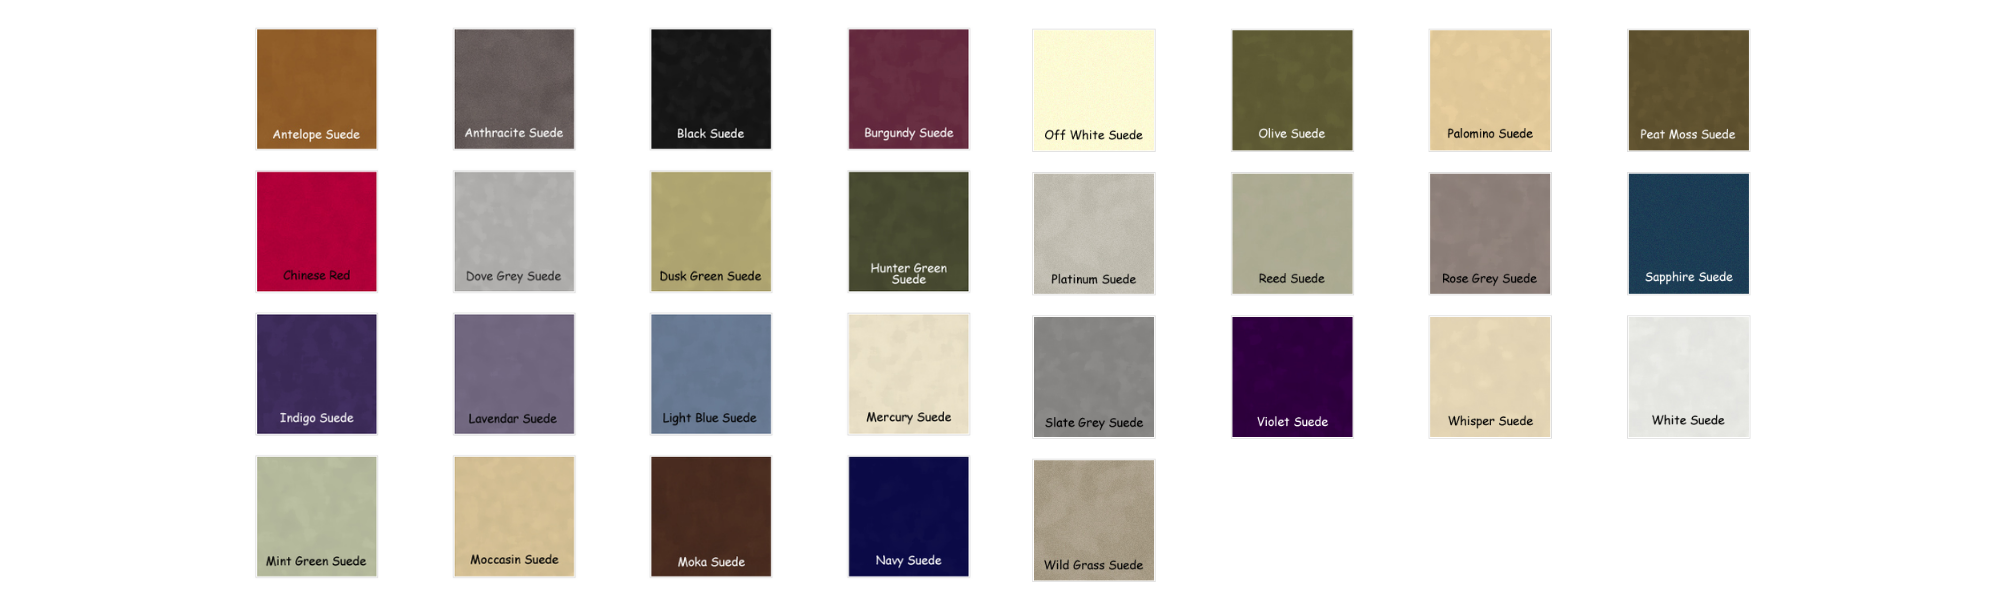 mat board colors 